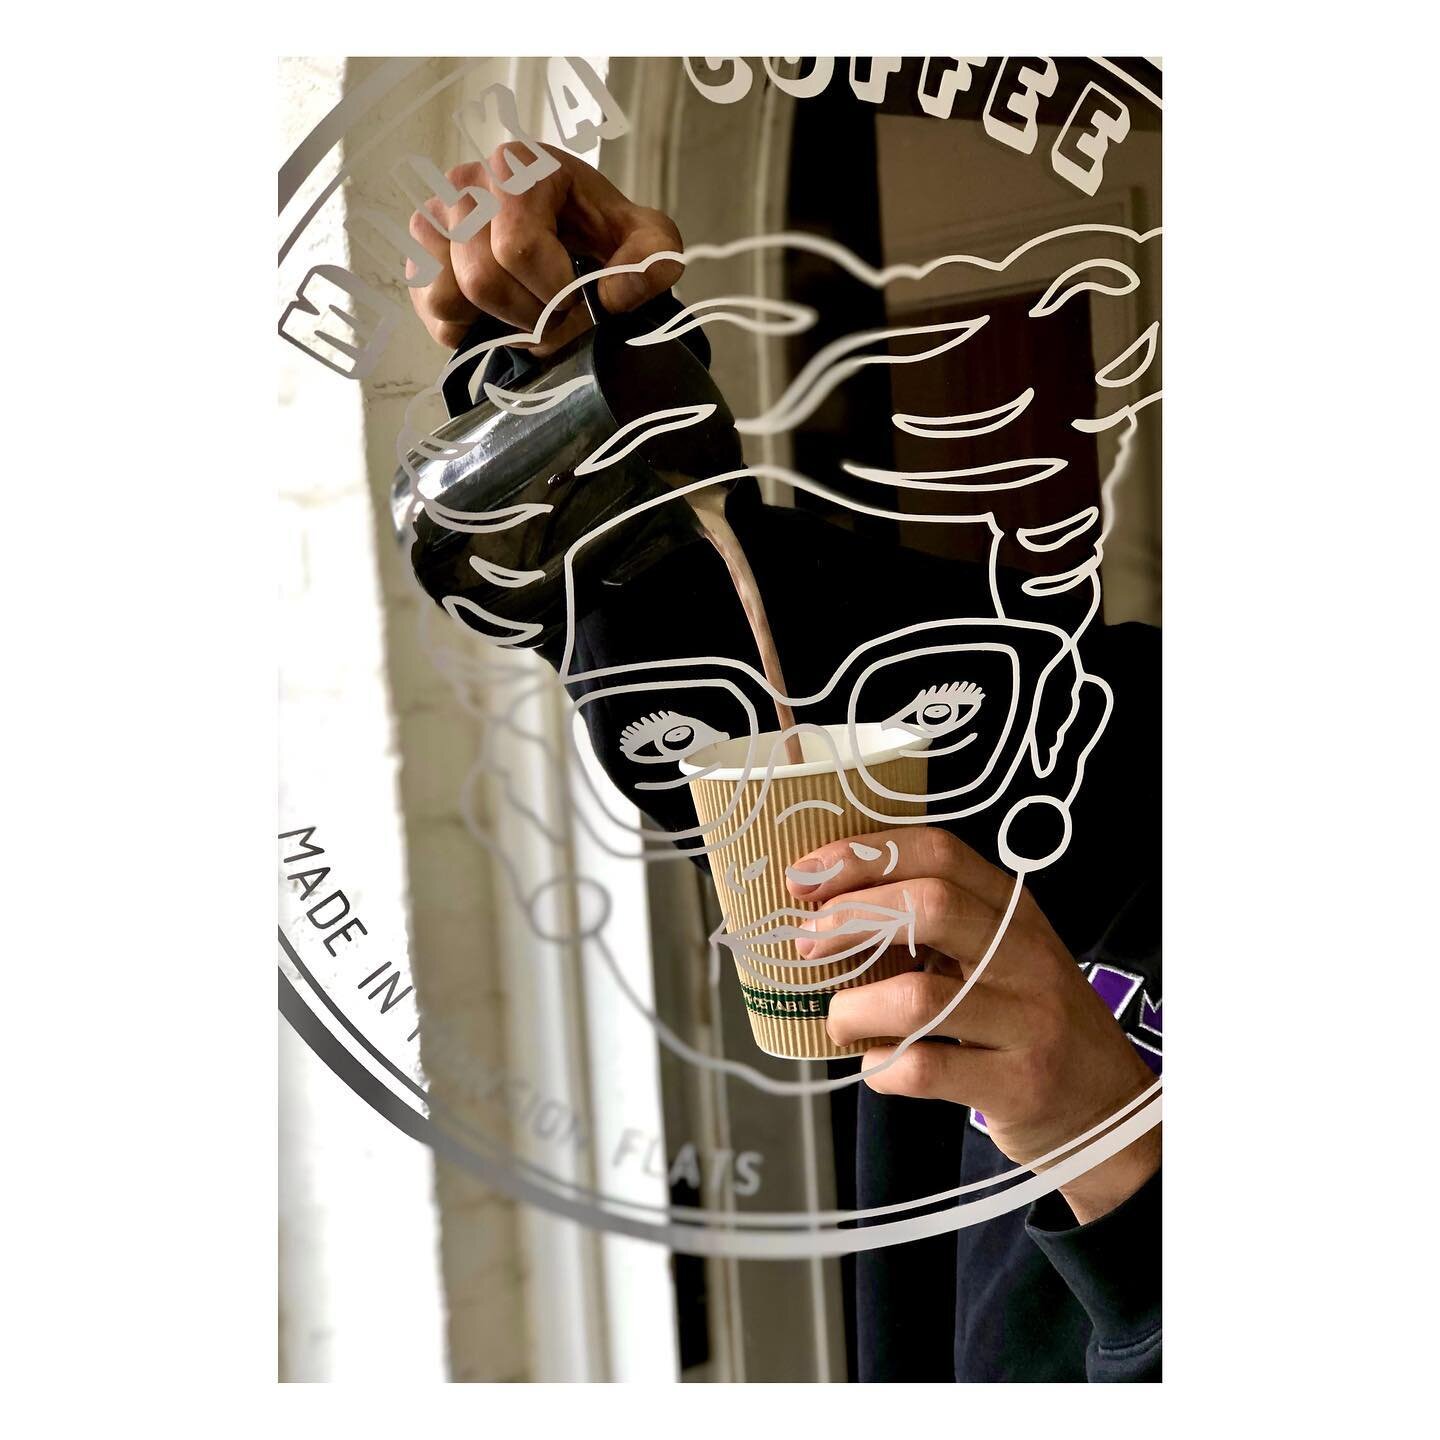 ✨ The Pour ✨ Essential to every drink!!
.
📷 @whereearethebananas 
.
.
.
.
.
.
#milkacoffee #midtownsac #mansionflats #sactown #saccoffee #sacramentoproud
#downtownsac #specialtycoffeeroaster #coffeeshop #latte #igersac #specialtycoffee
#matcha #tea 